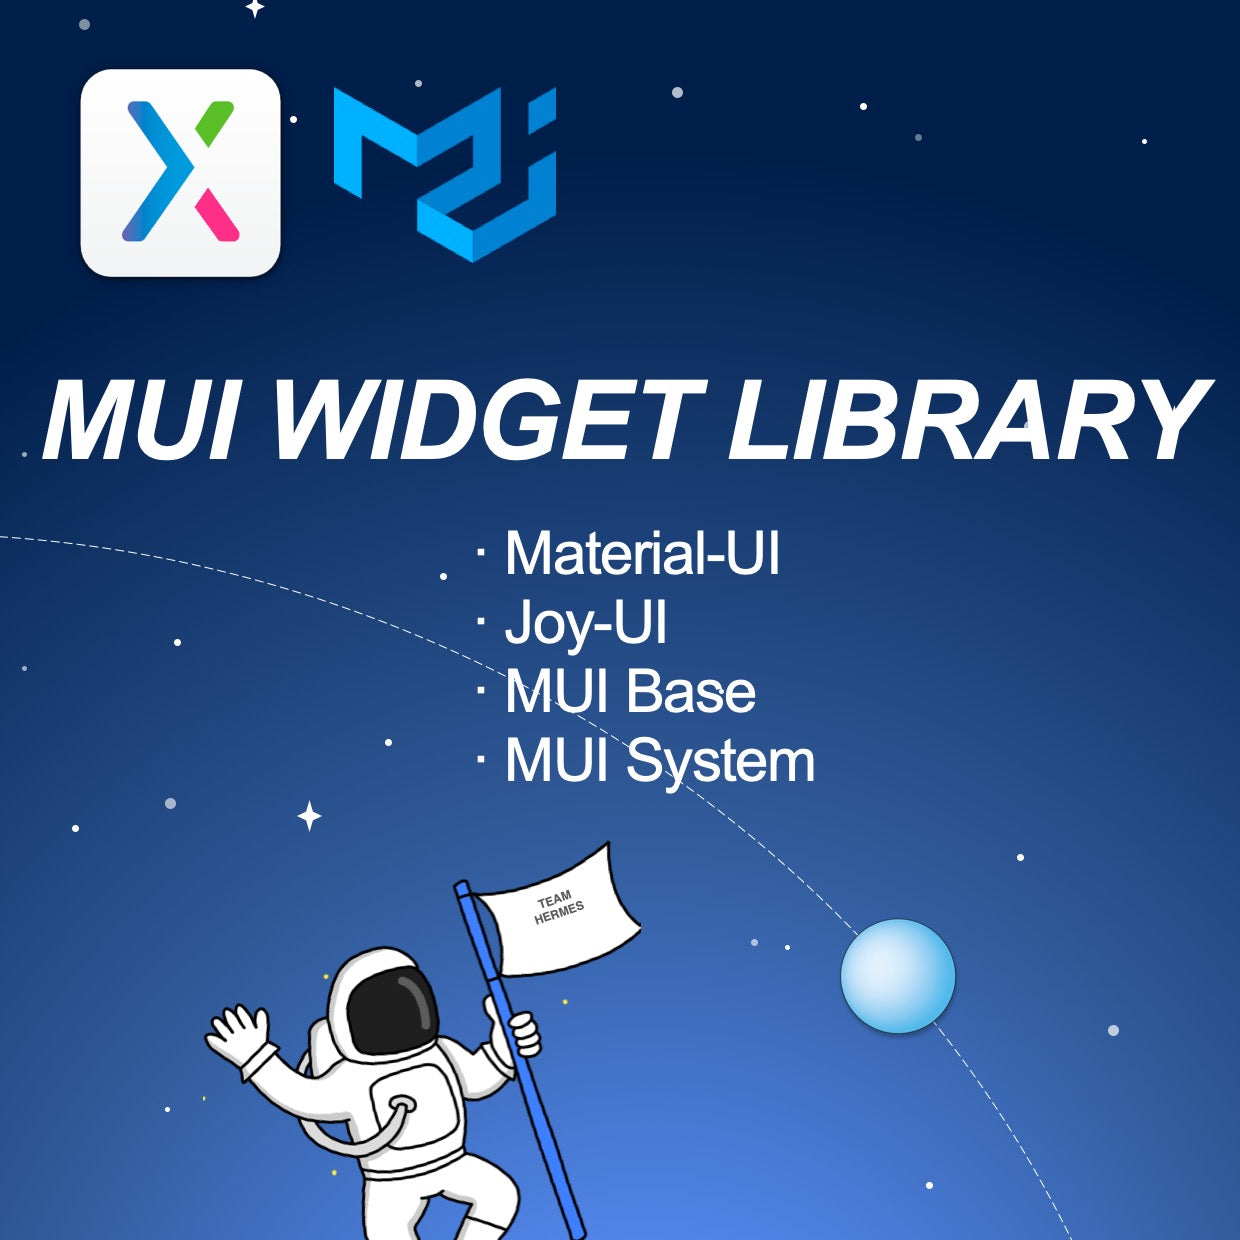 MUI Widget Library (Material-UI+Joy-UI+MUI Base+MUI System)